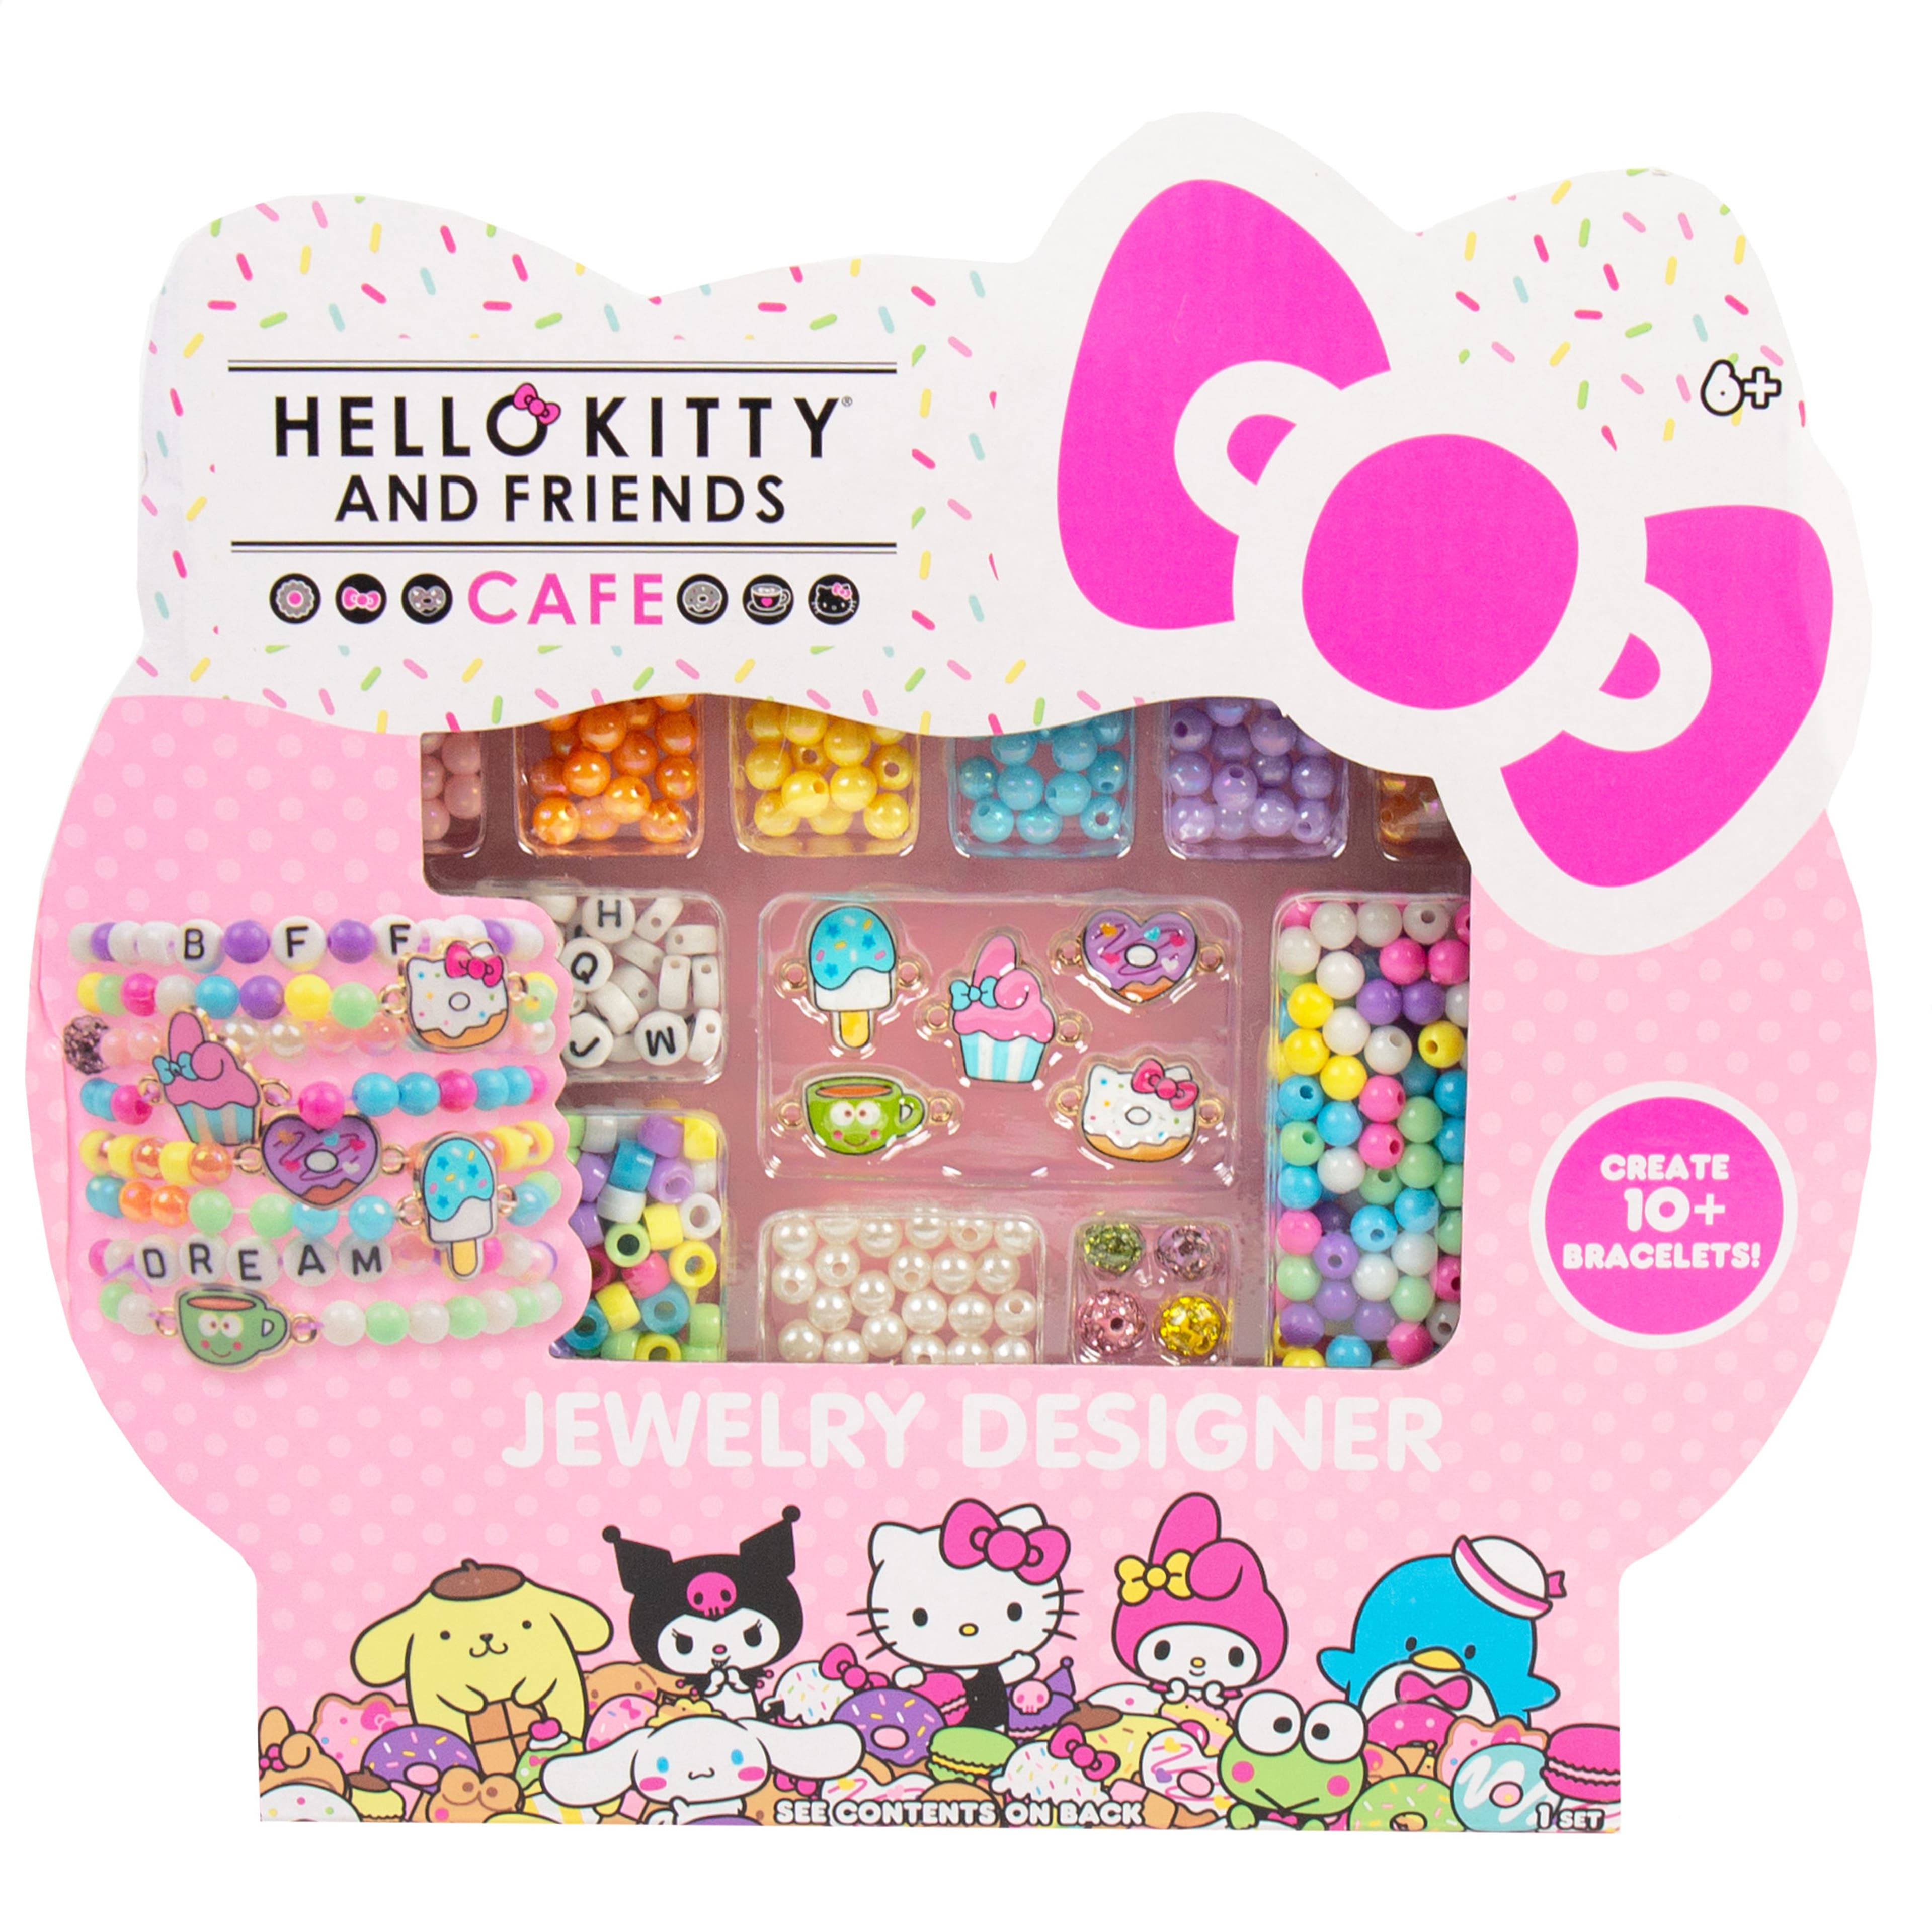 Pulseras hello kitty  Hello kitty jewelry, Hello kitty items